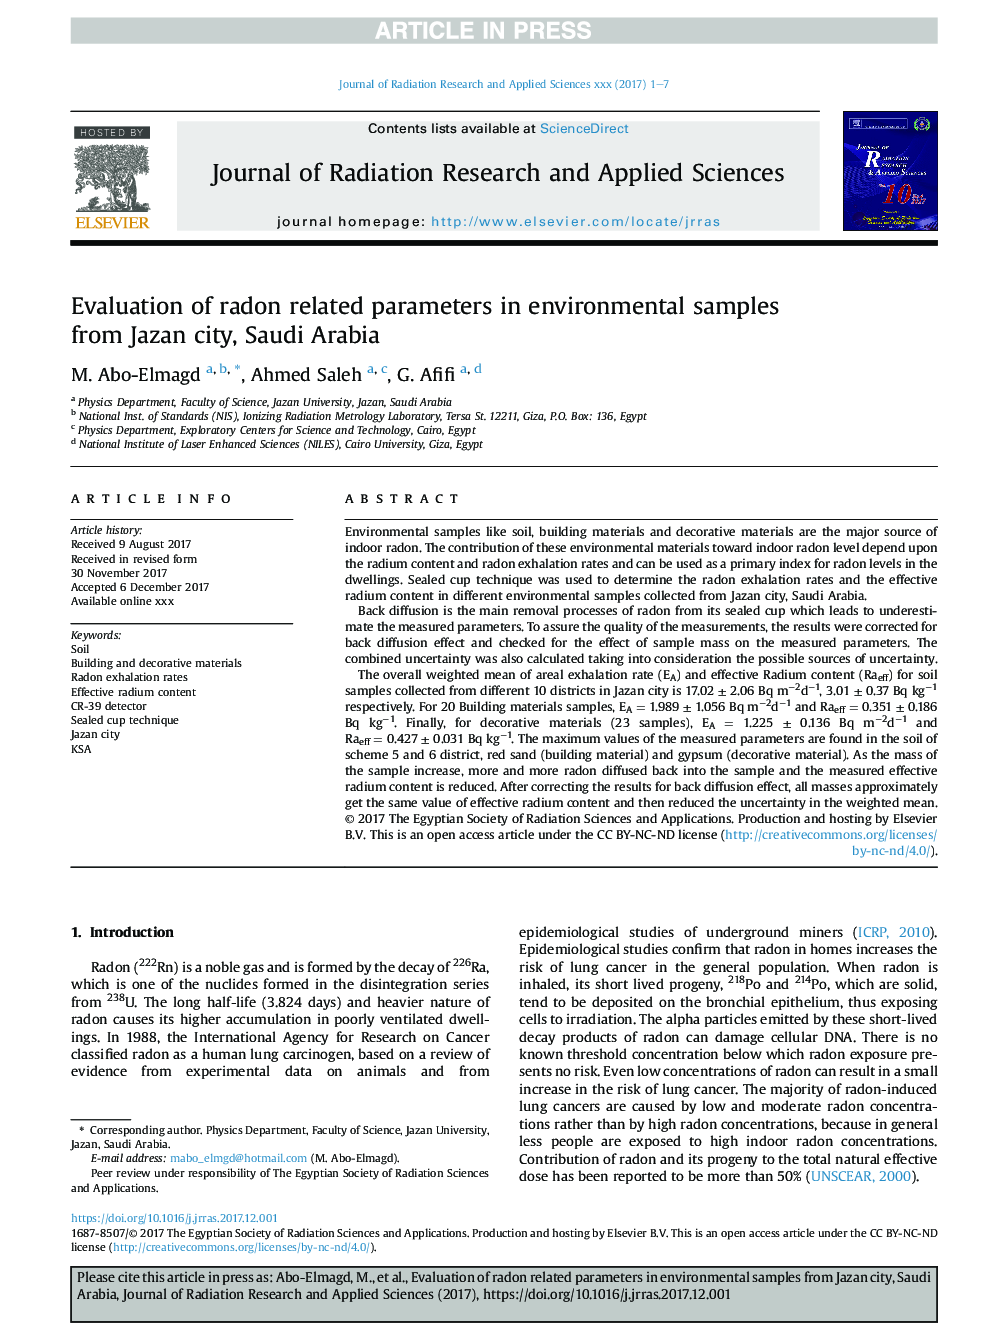 Evaluation of radon related parameters in environmental samples from Jazan city, Saudi Arabia